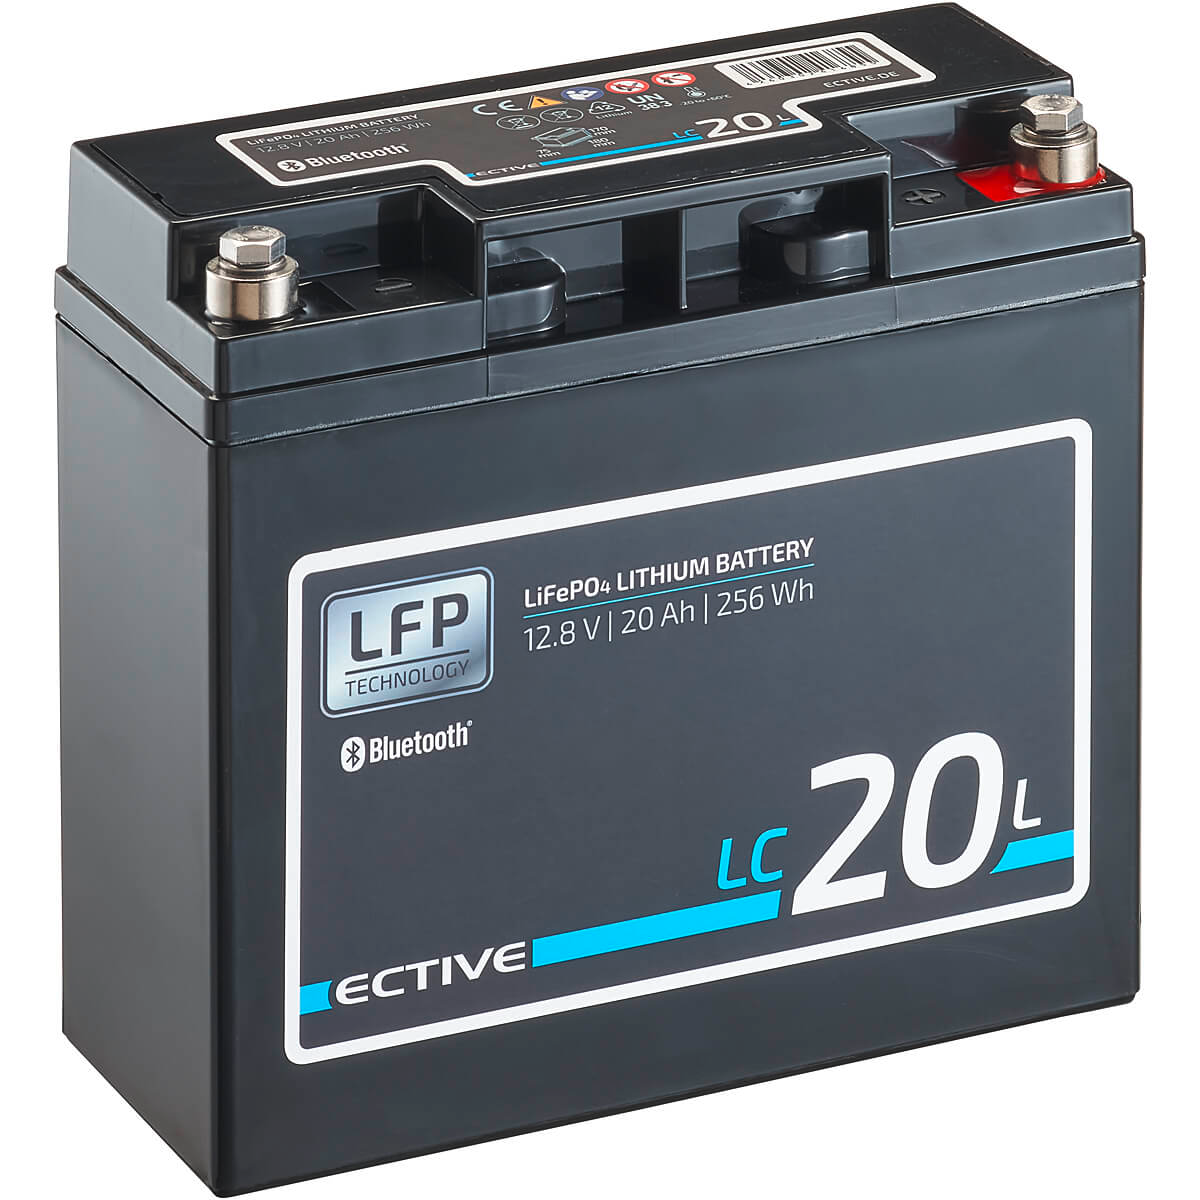 Enduro Batterie lithium-ion LI1230 12 V / 30 Ah - Accessoires de camping  Berger Camping